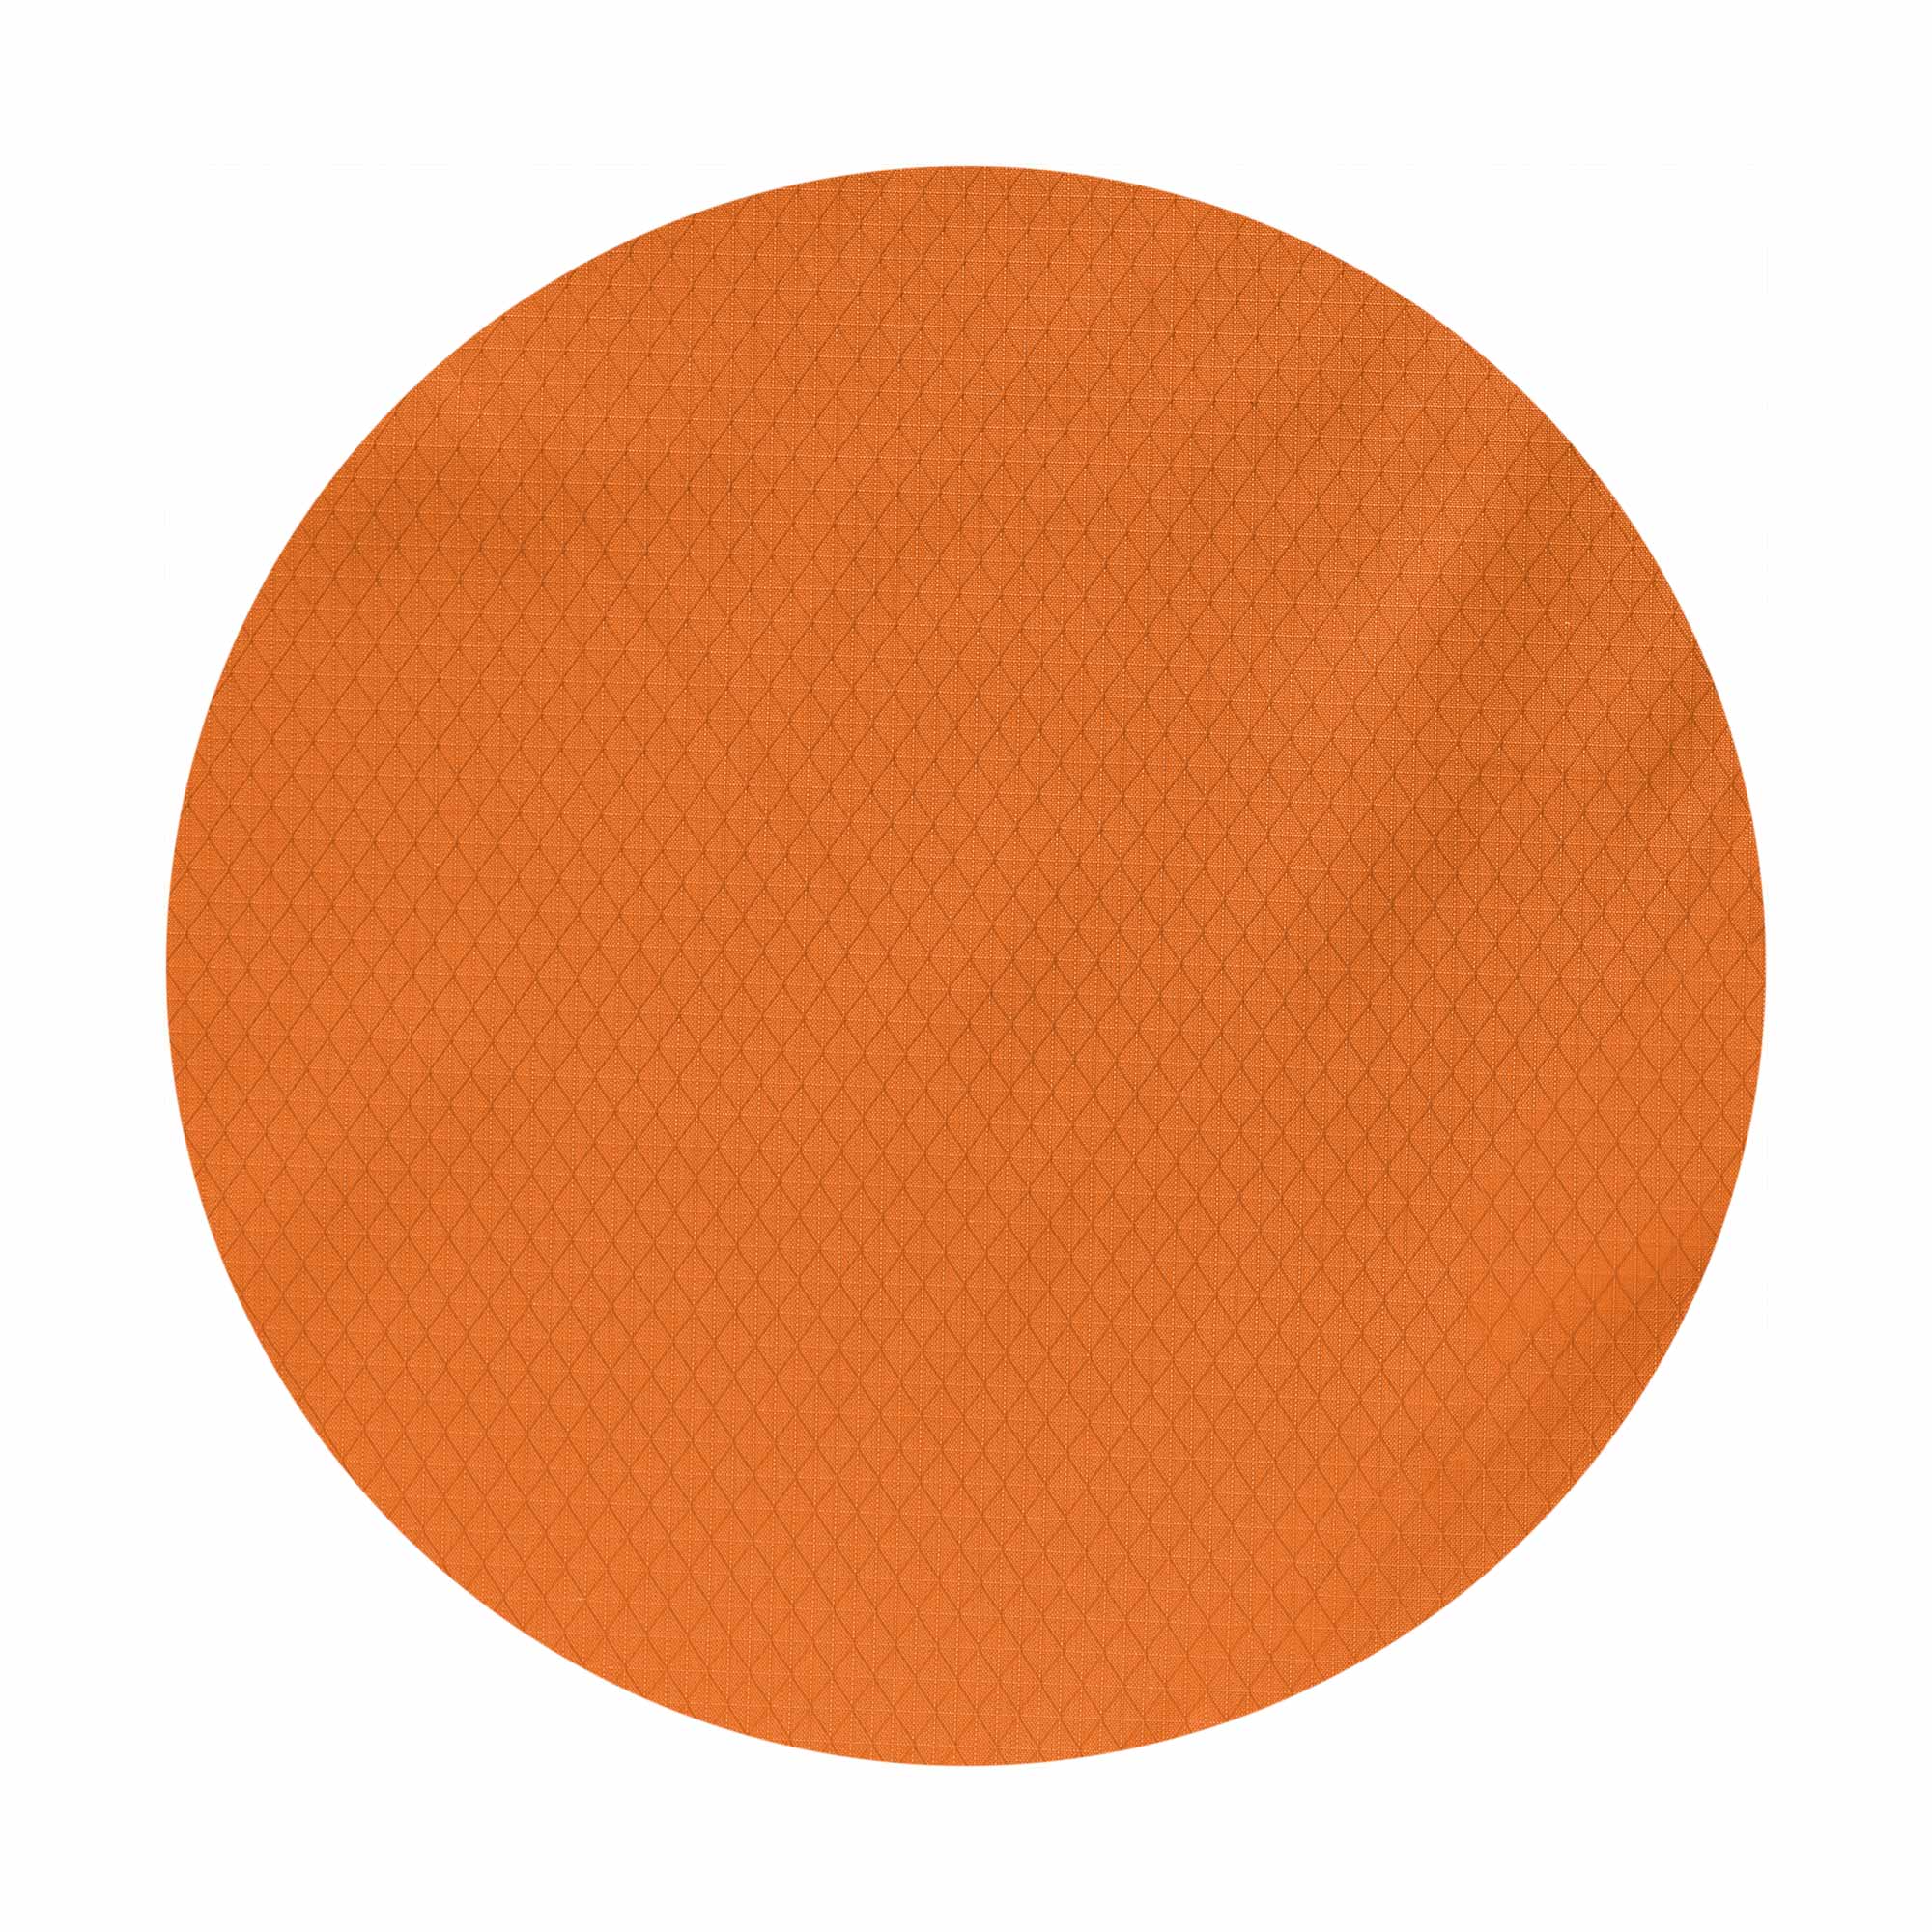 1 Yard Orange Ripstop Nylon Fabric 60 inches wide